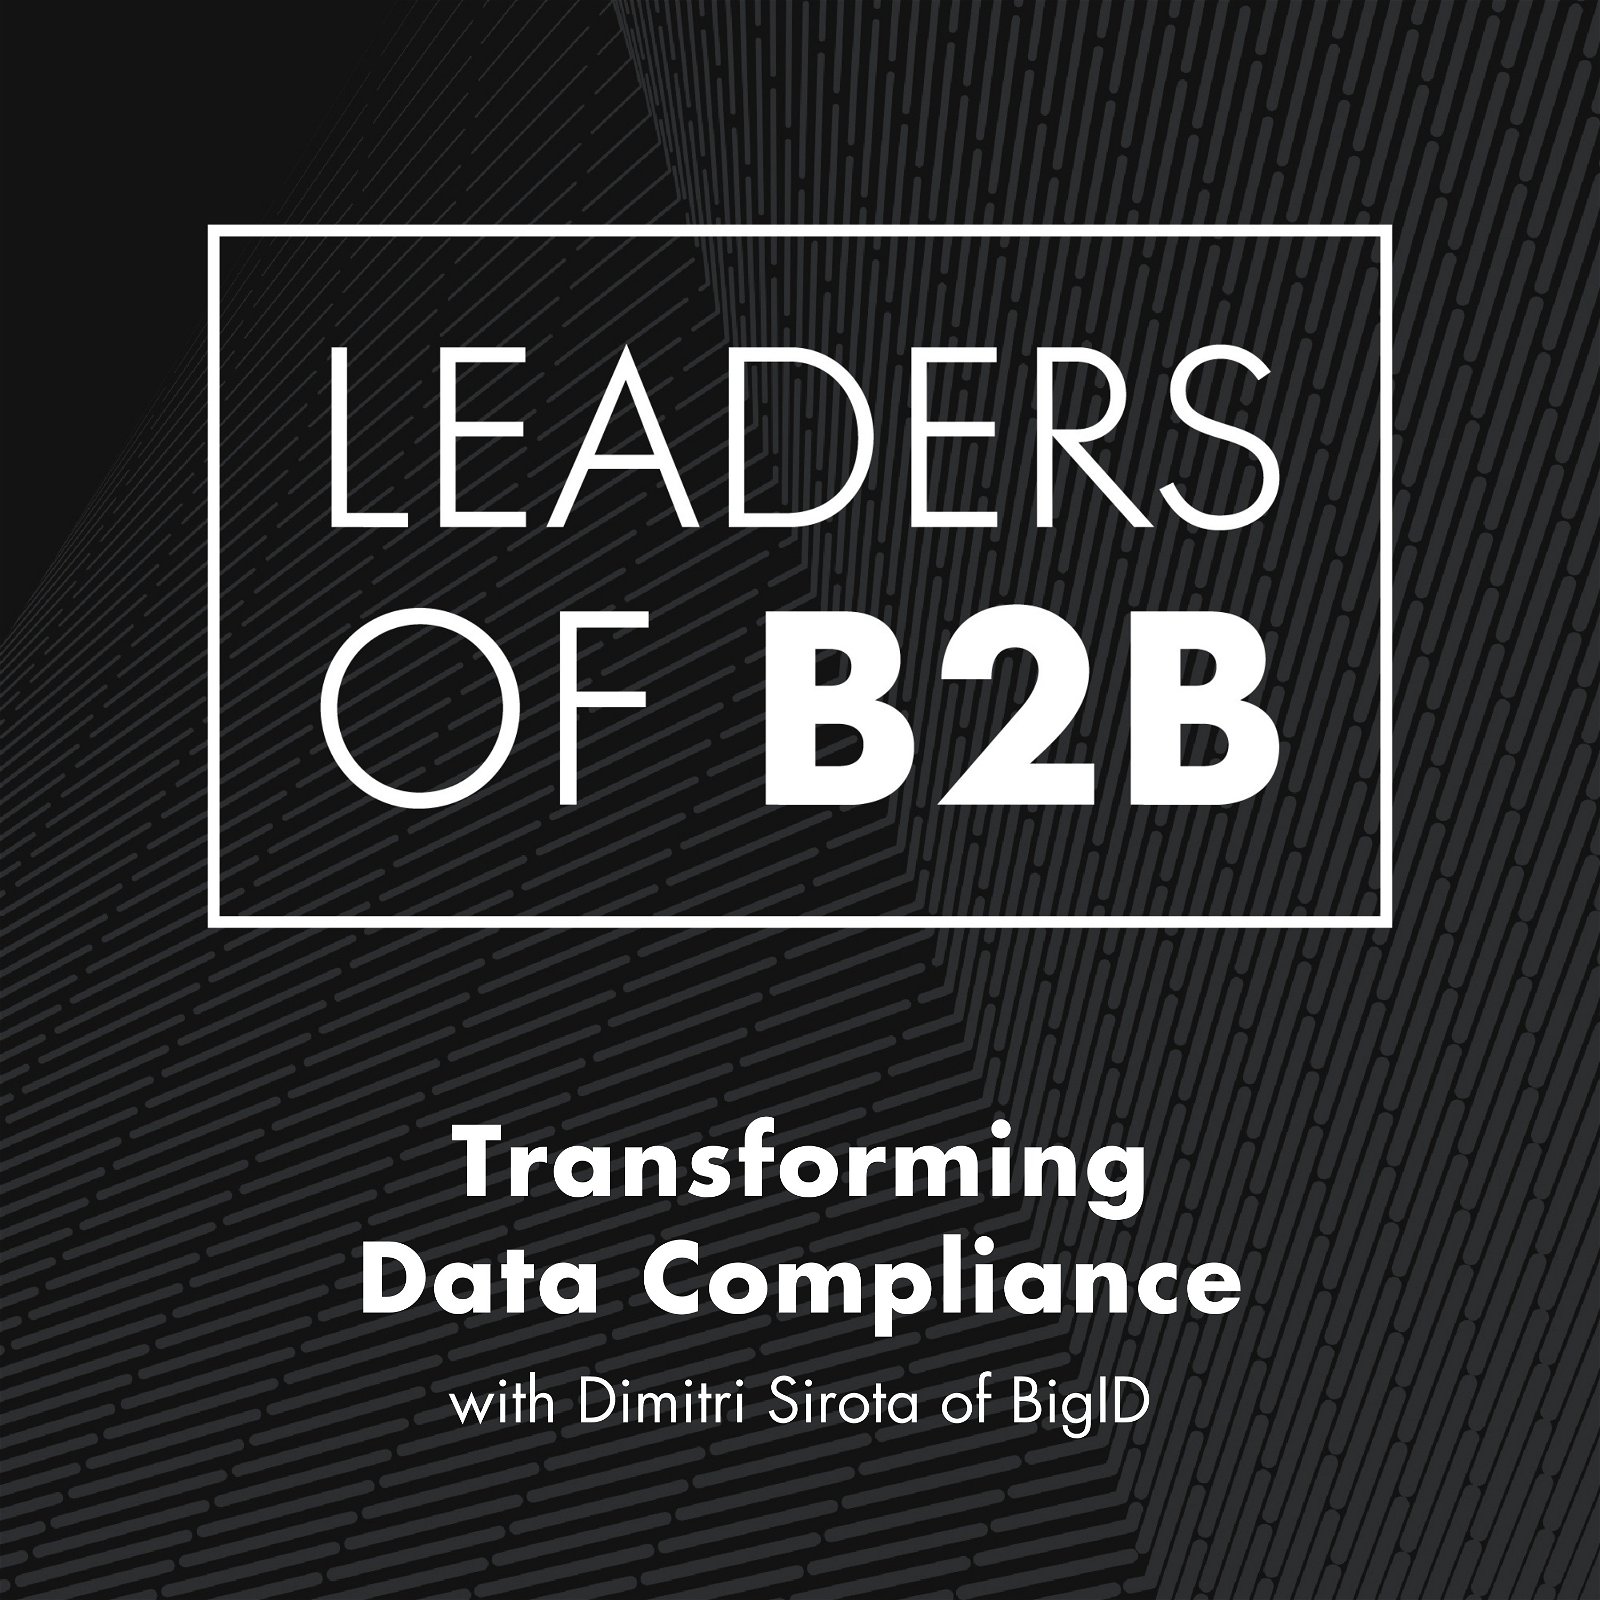 Transforming Data Compliance with Dimitri Sirota of BigID